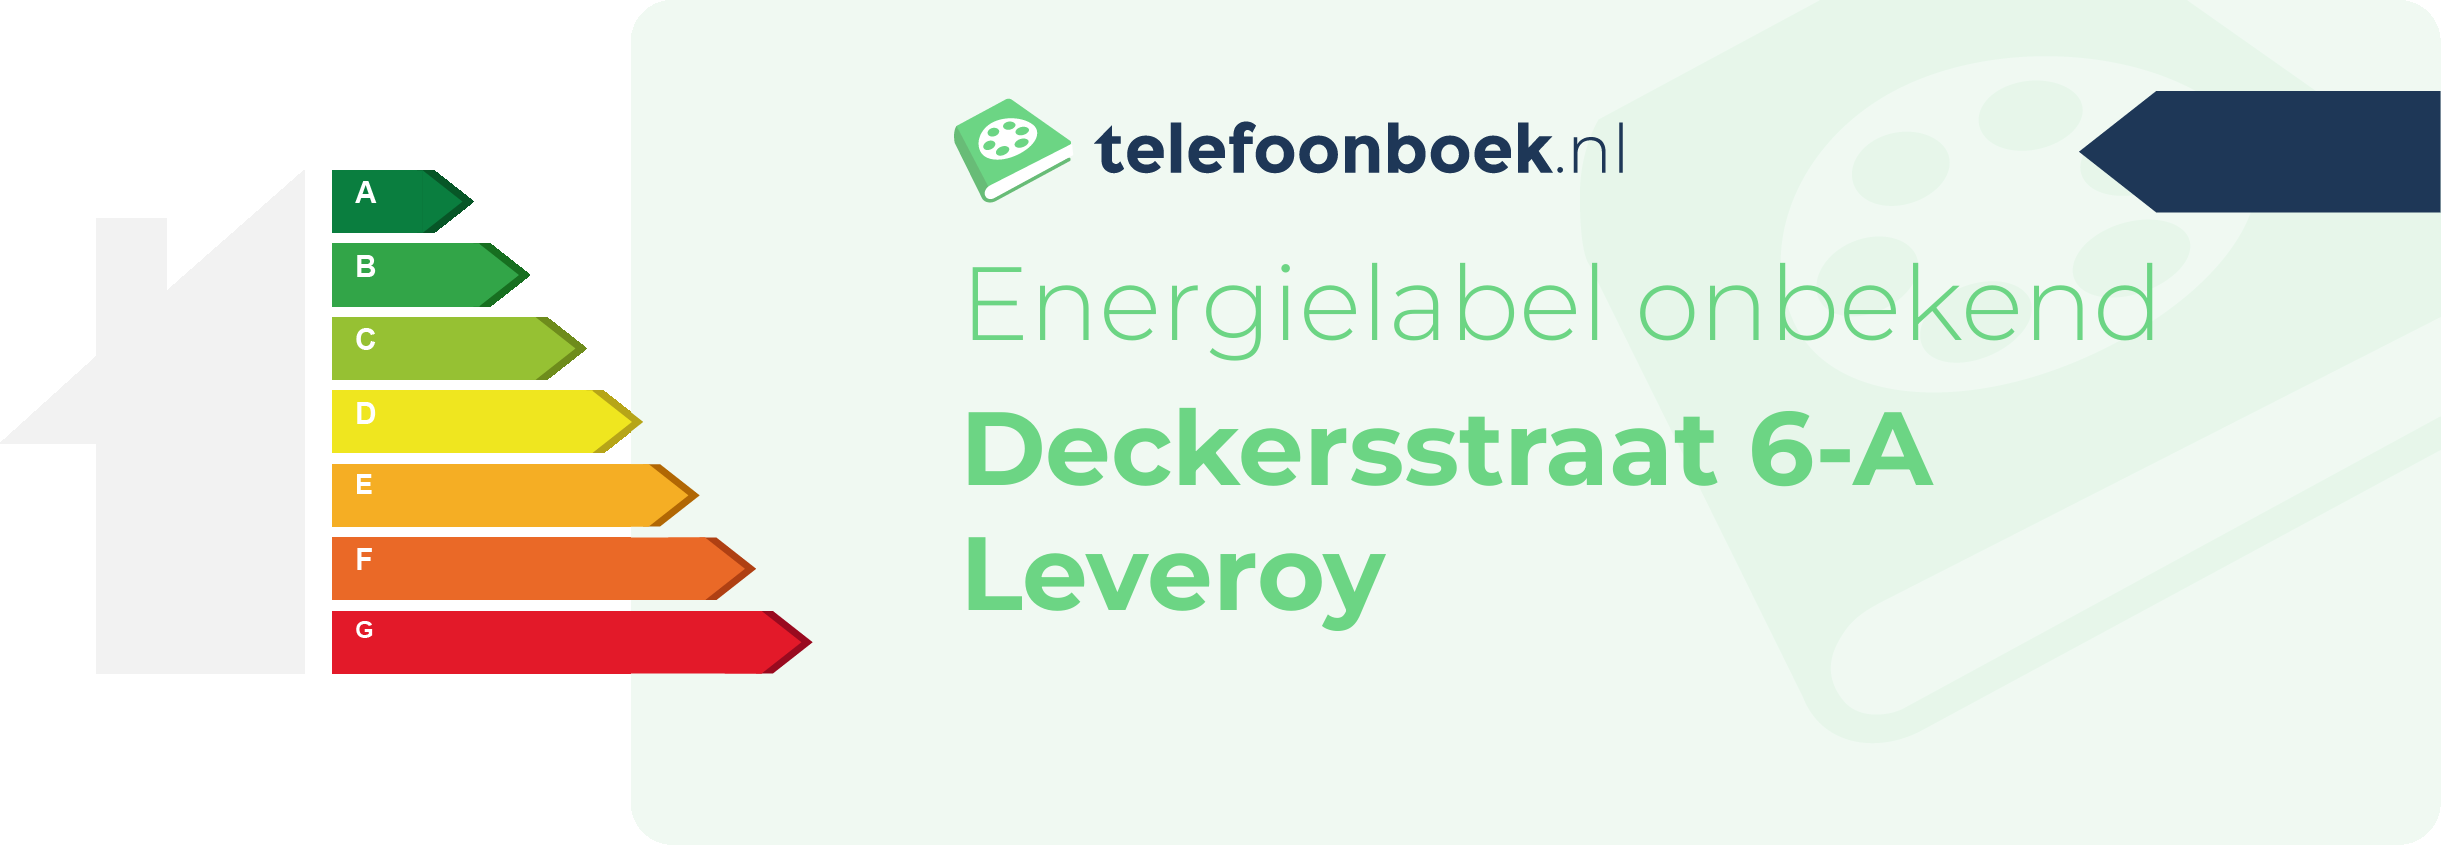 Energielabel Deckersstraat 6-A Leveroy